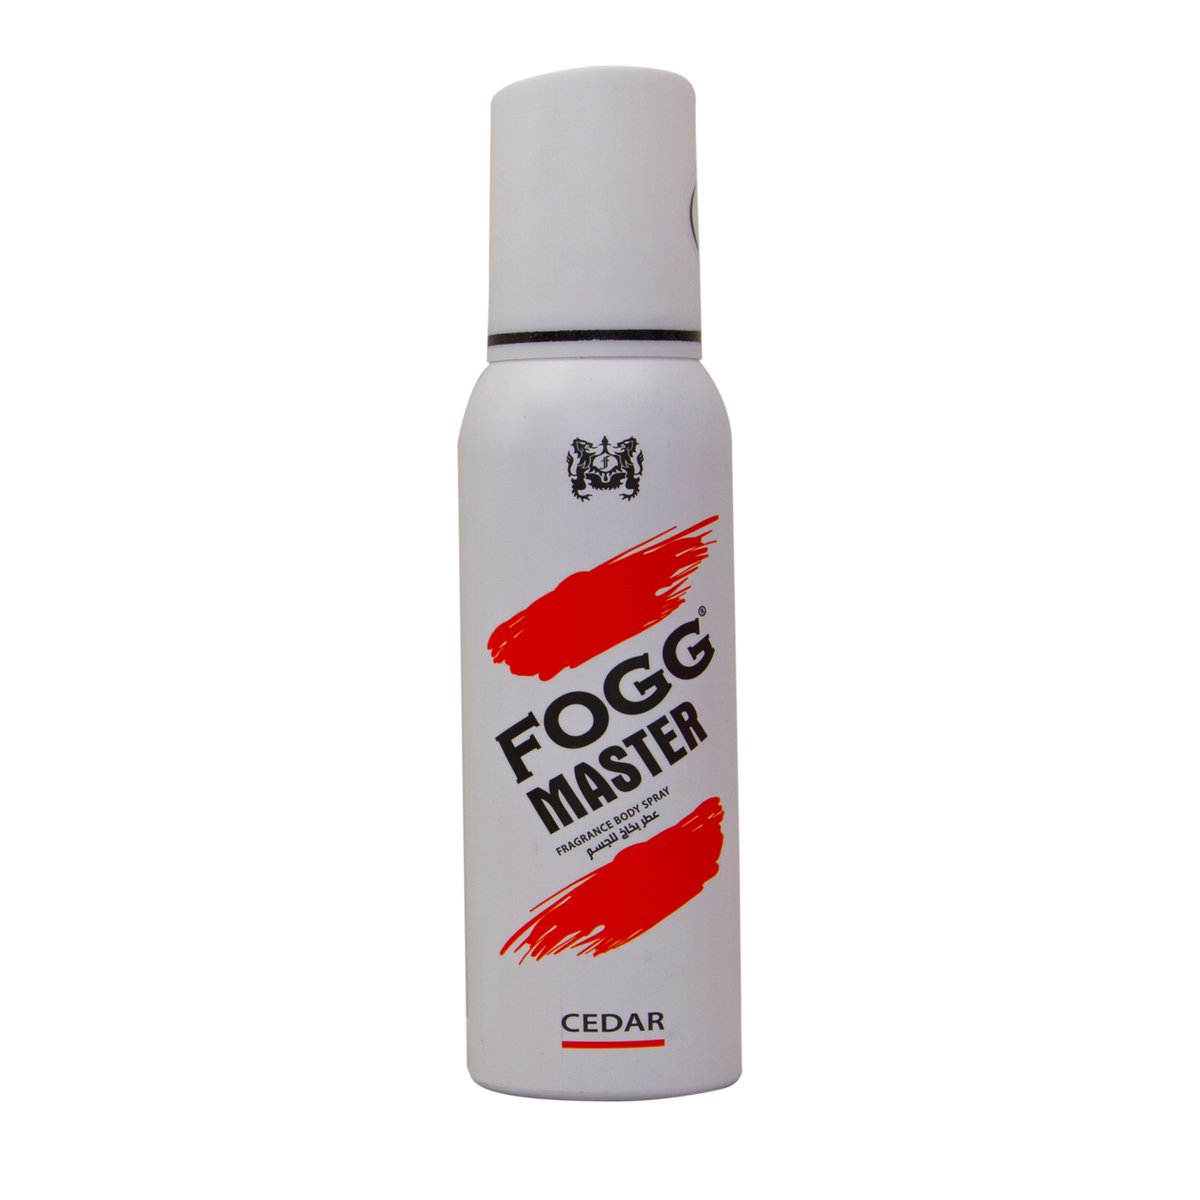 Fogg Master Cedar Fragrance Body Spray 150 ml